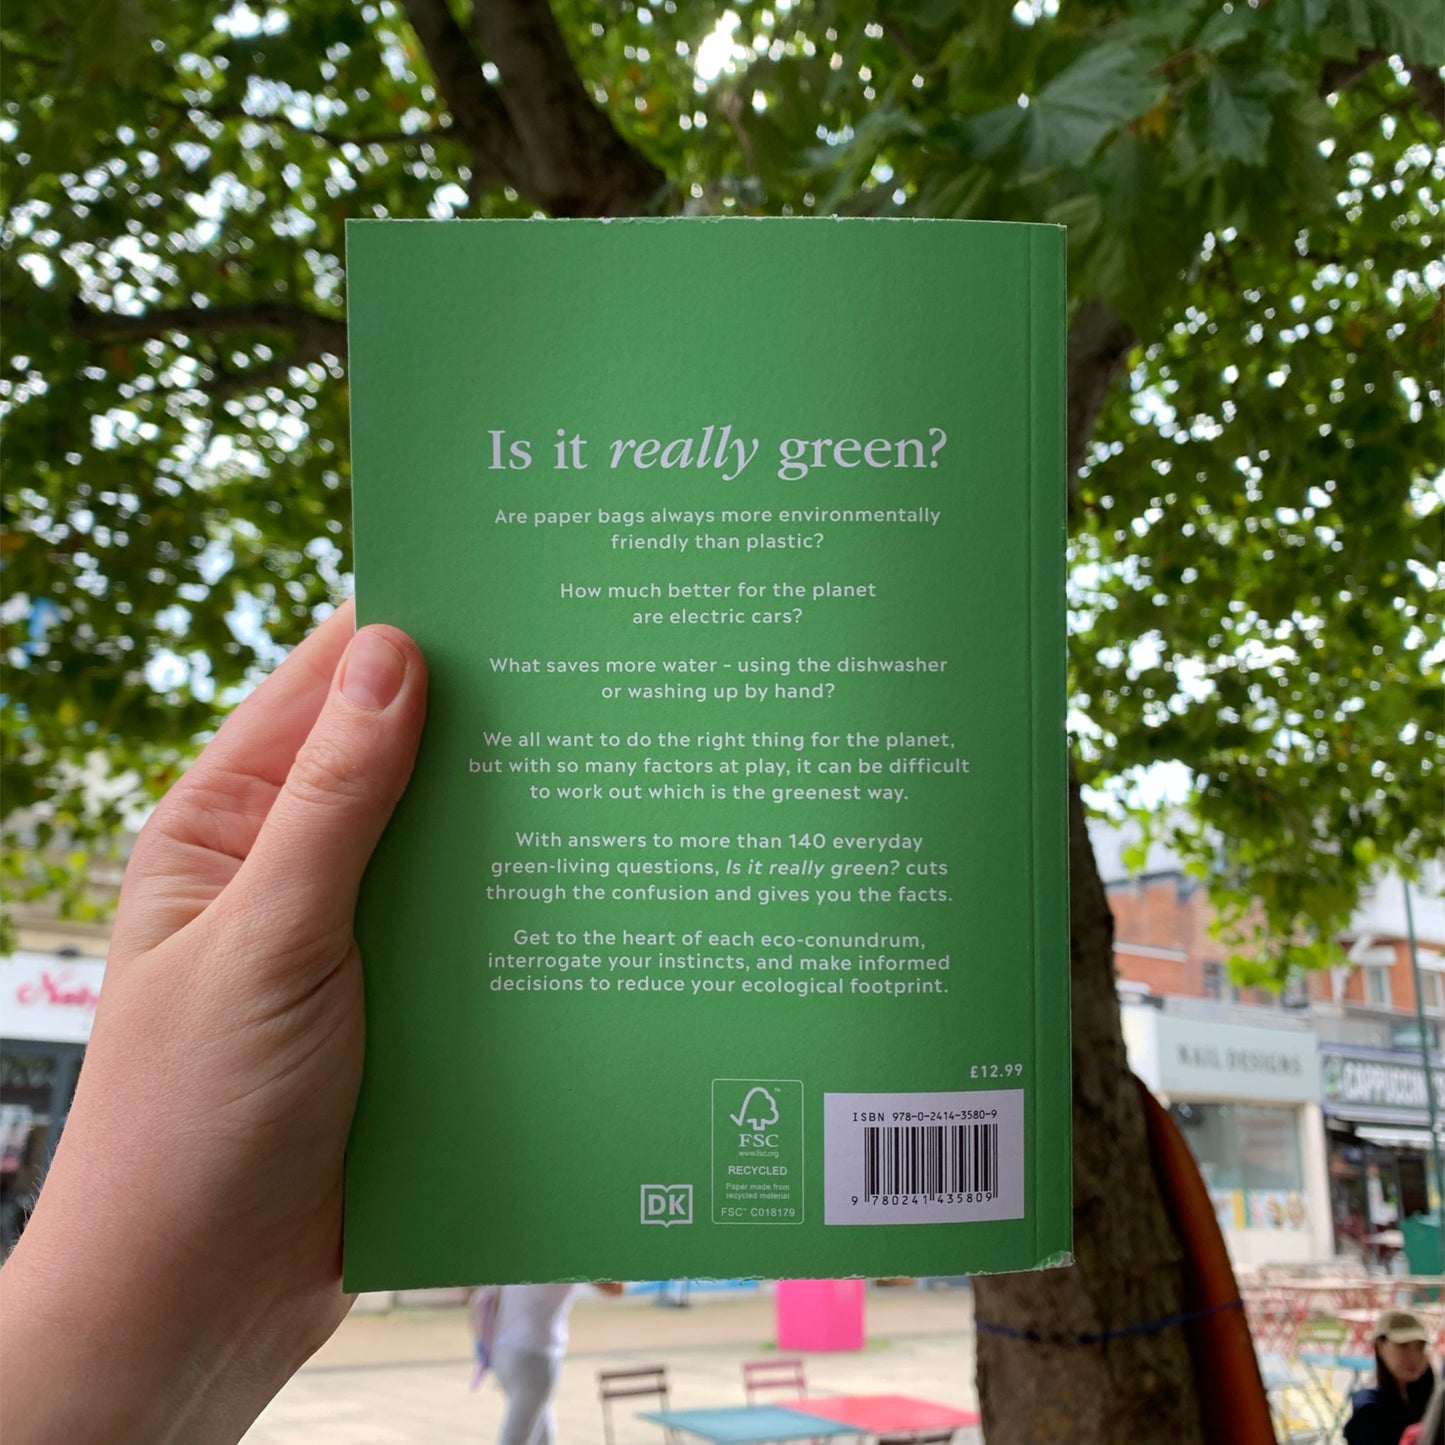 ‘Is it really green?’ by Georgina Wilson-Powell